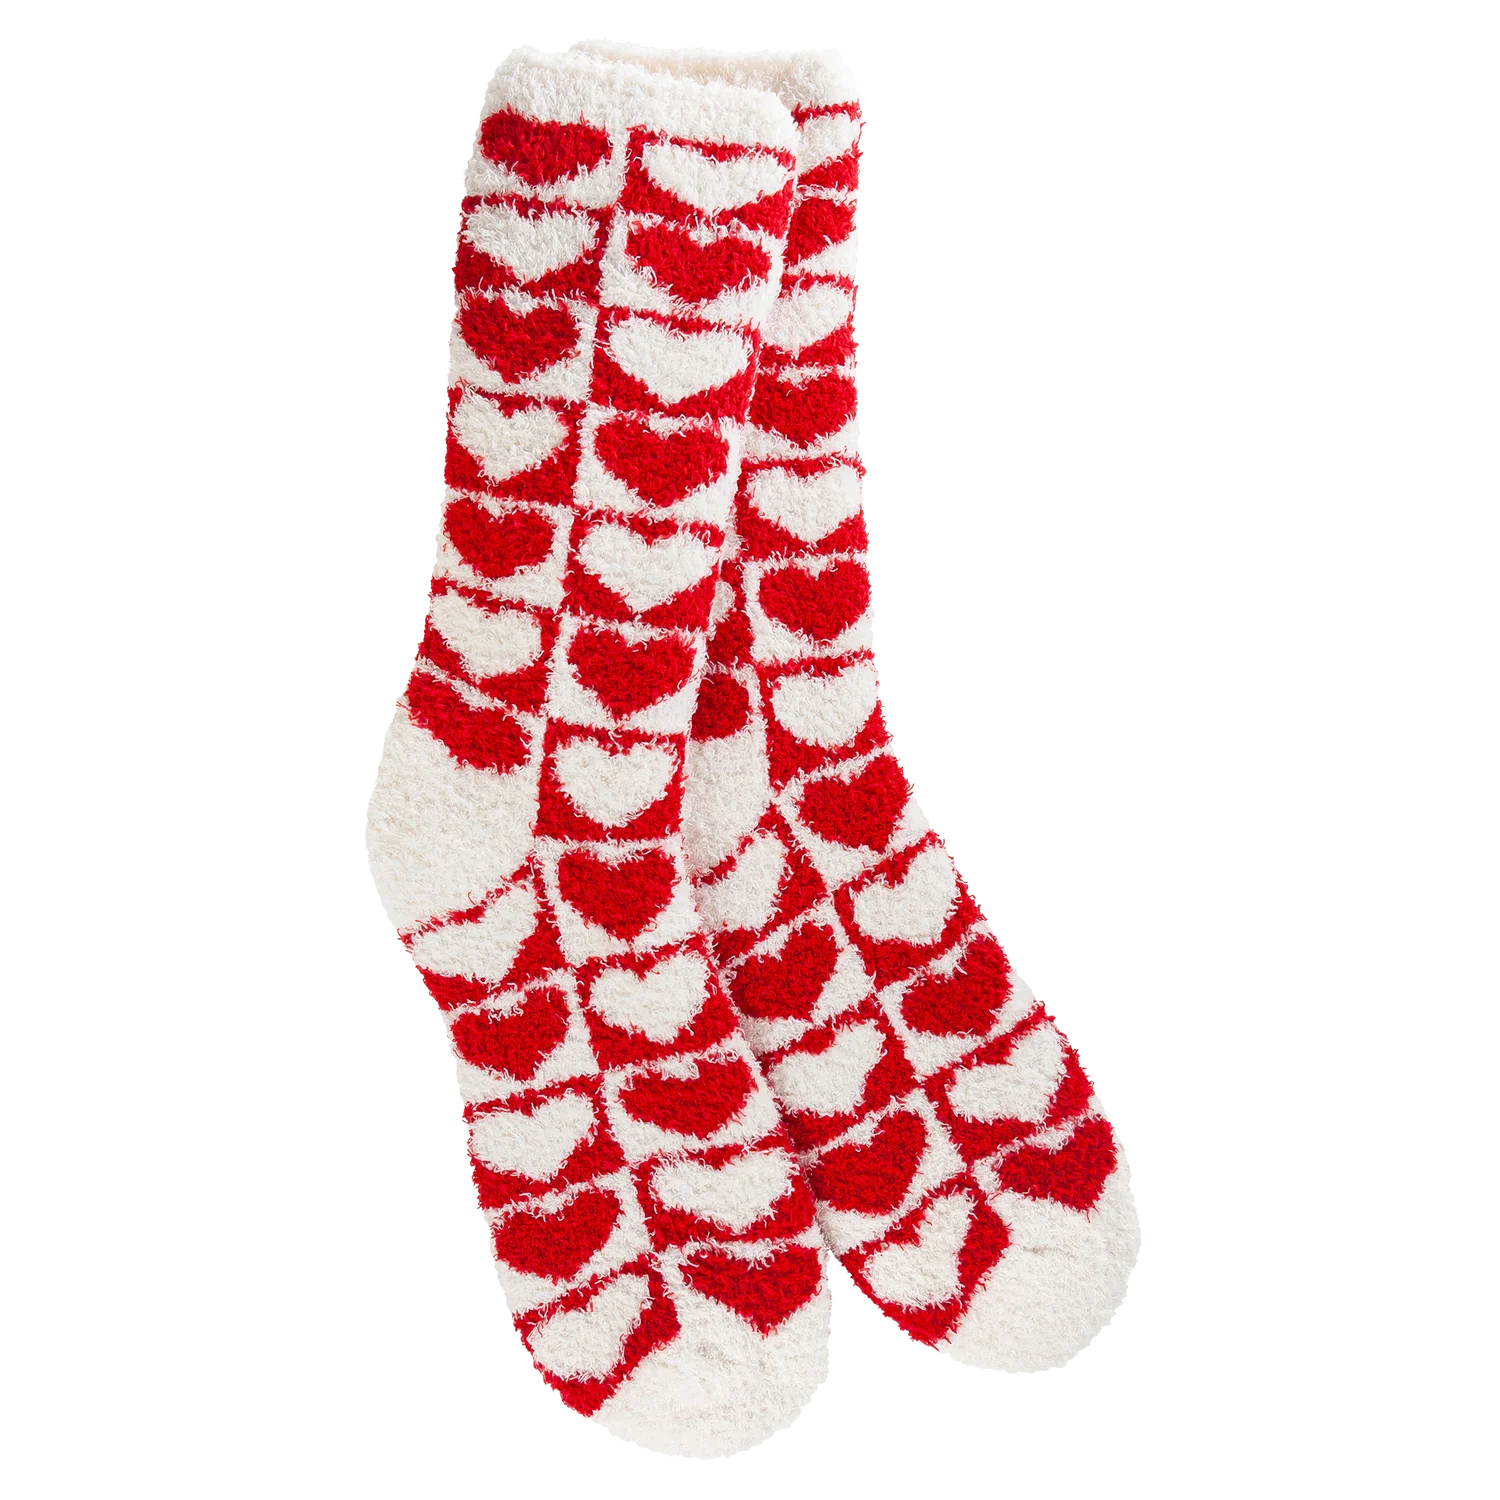 Checkered Heart World's Softest Socks